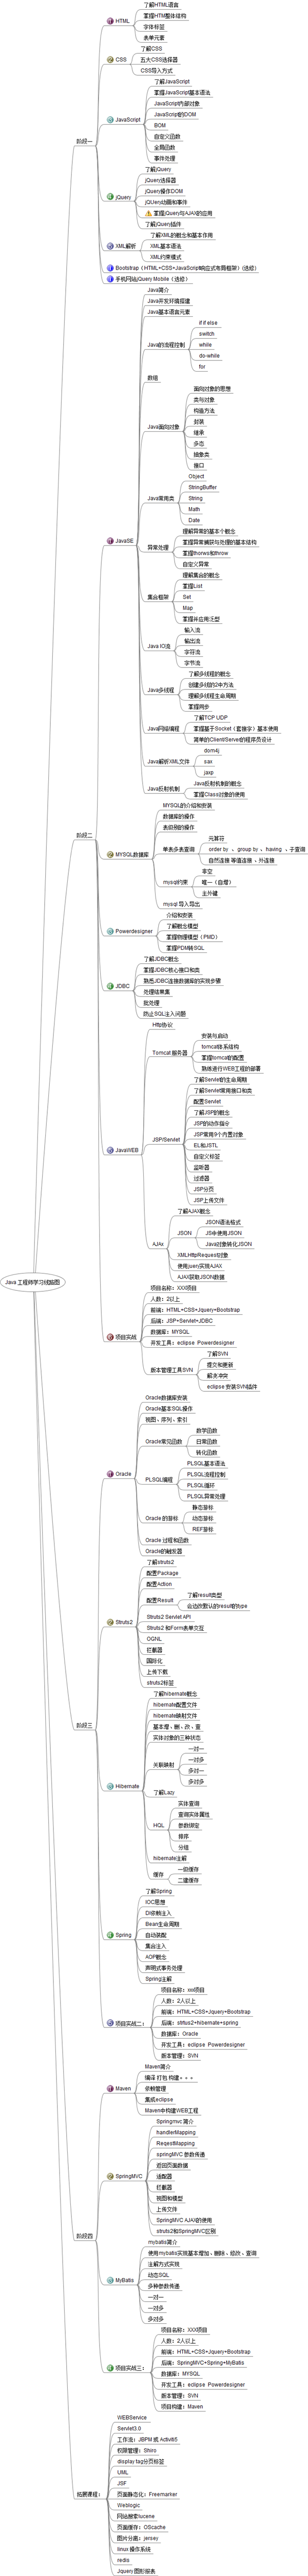 Java学习路线规划图